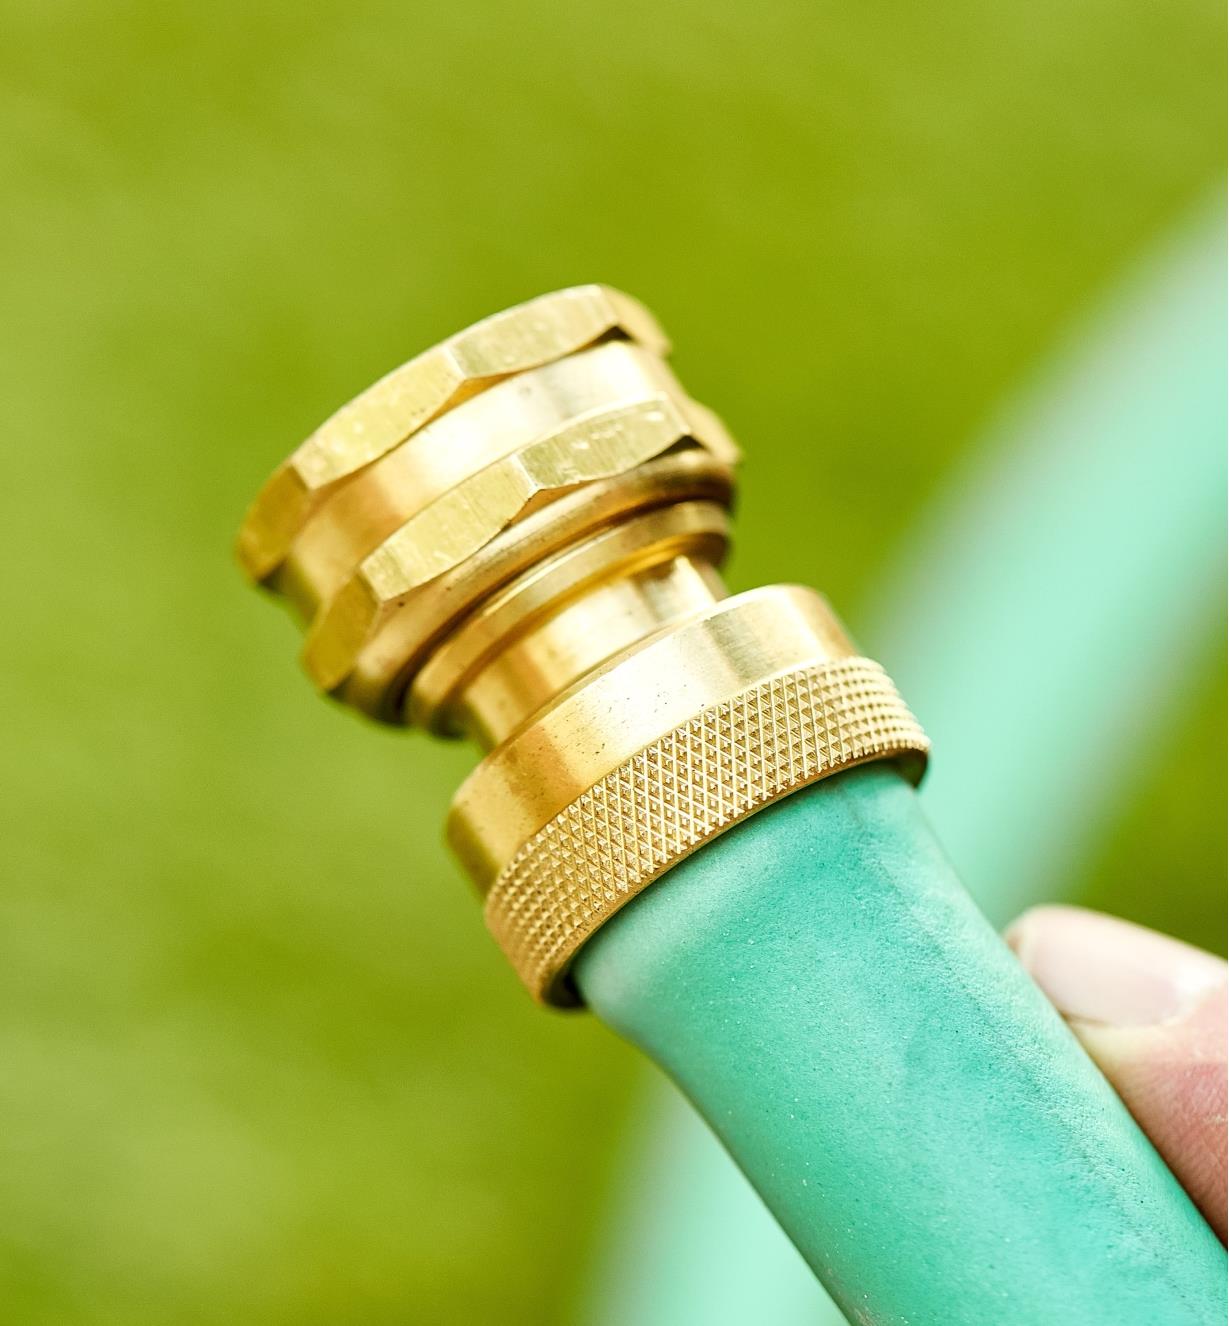 The female brass hose coupler installed on a hose end